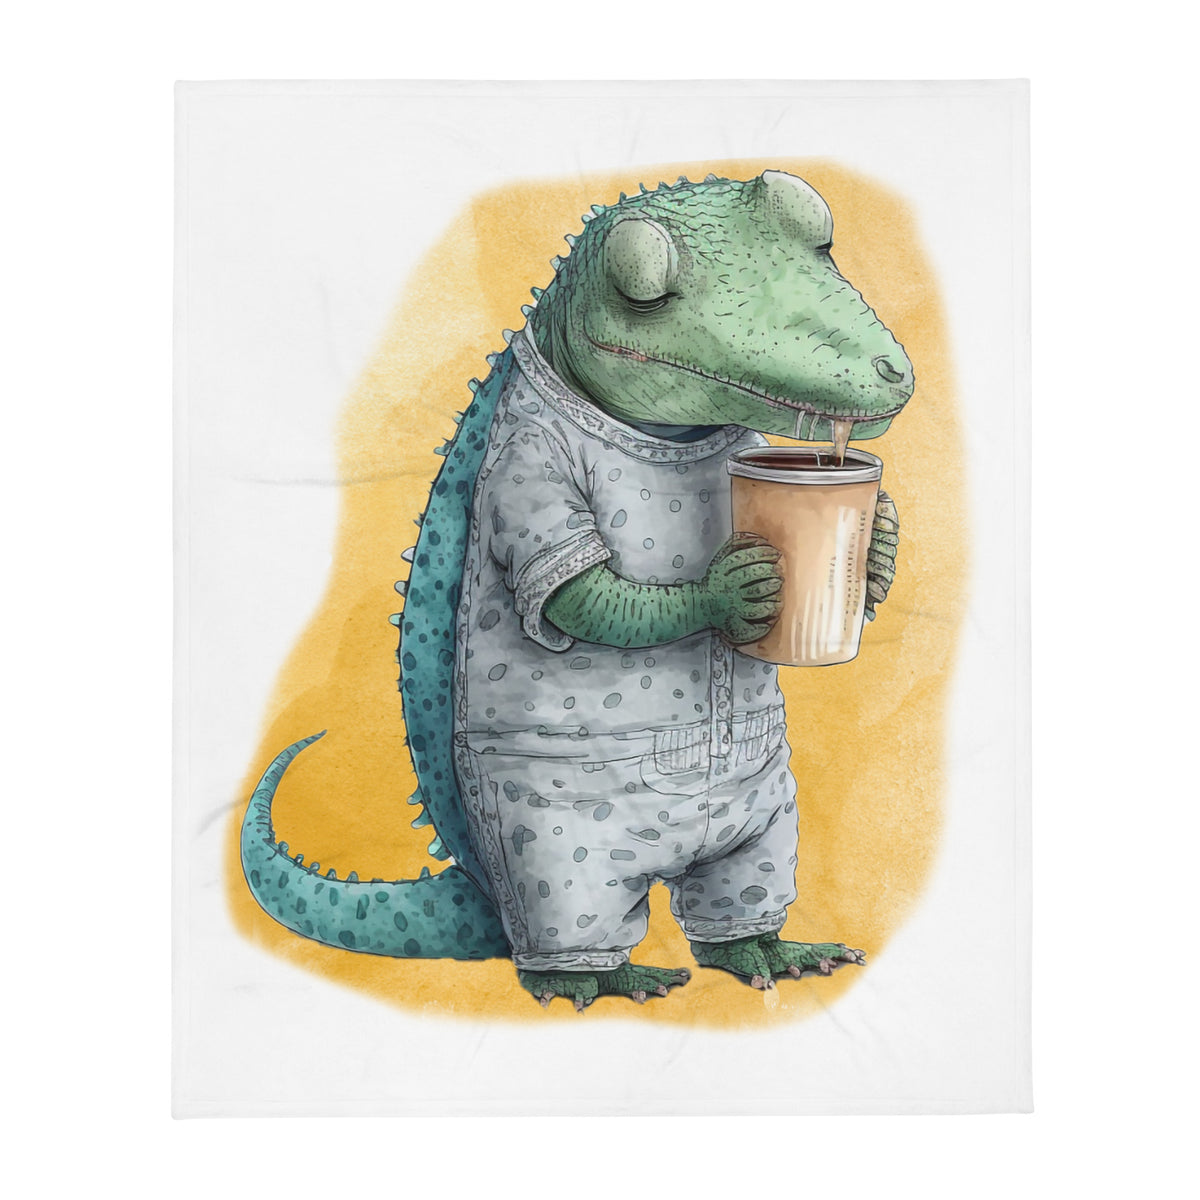 Sleepy Crocodile 100% Polyester Soft Silk Touch Fabric Throw Blanket - Cozy, Durable and Adorable